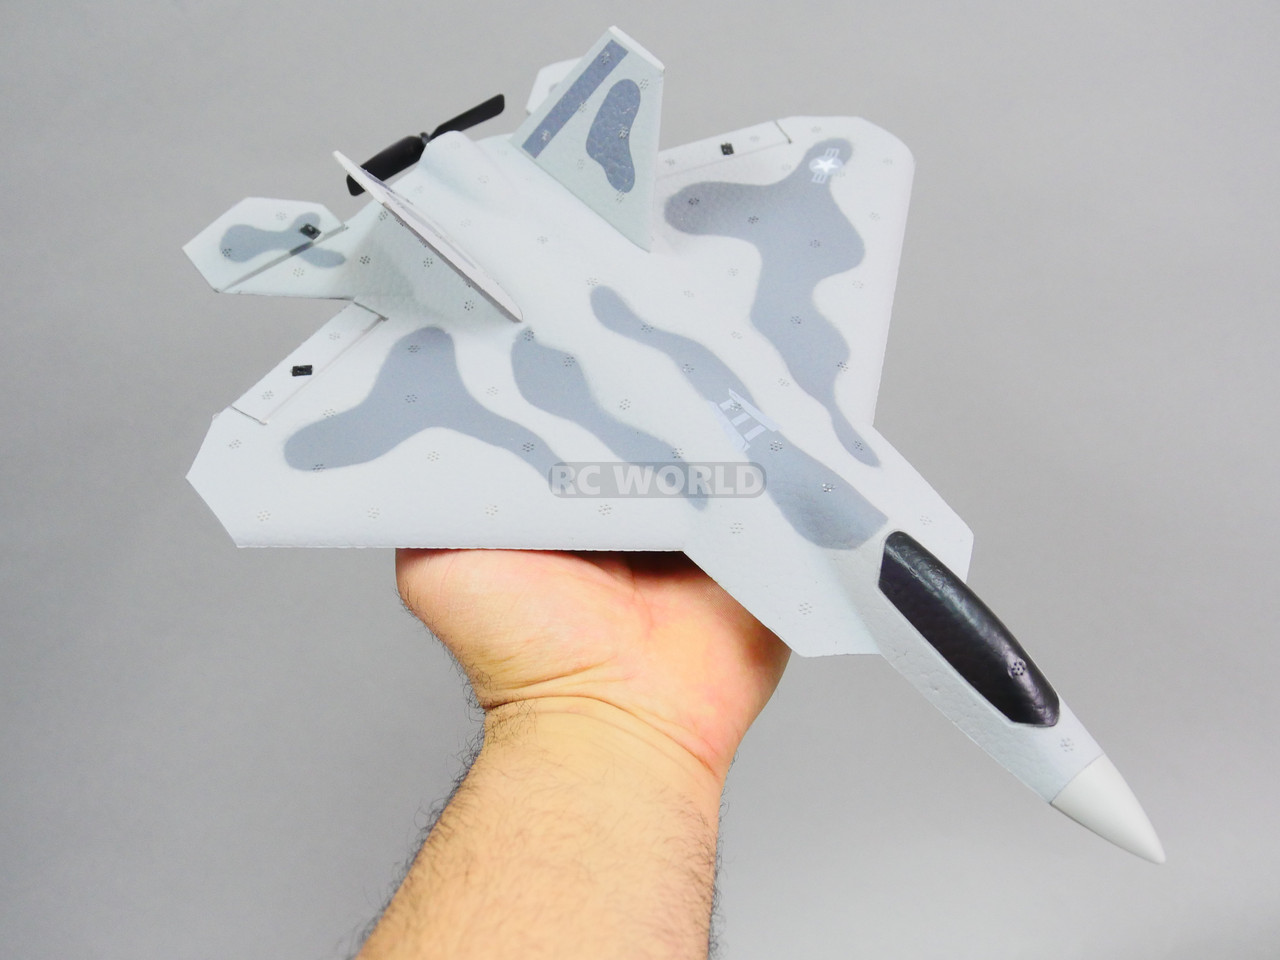 micro f22 jet fighter